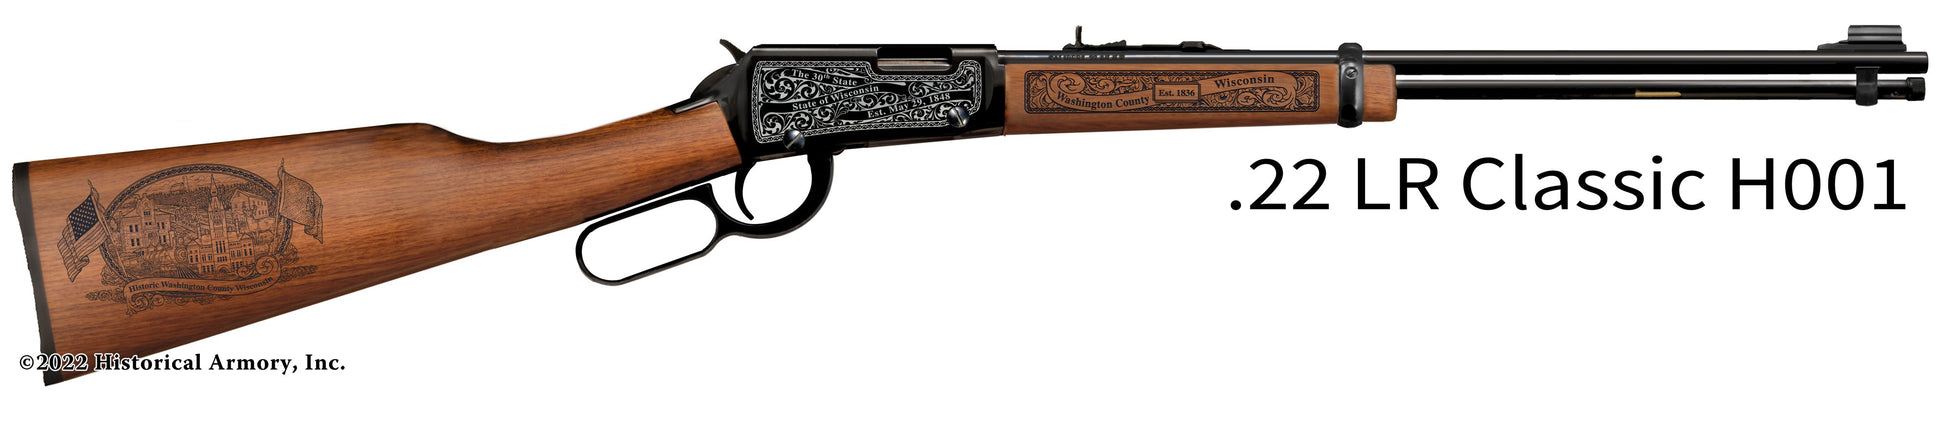 Washington County Wisconsin Engraved Henry H001 Rifle